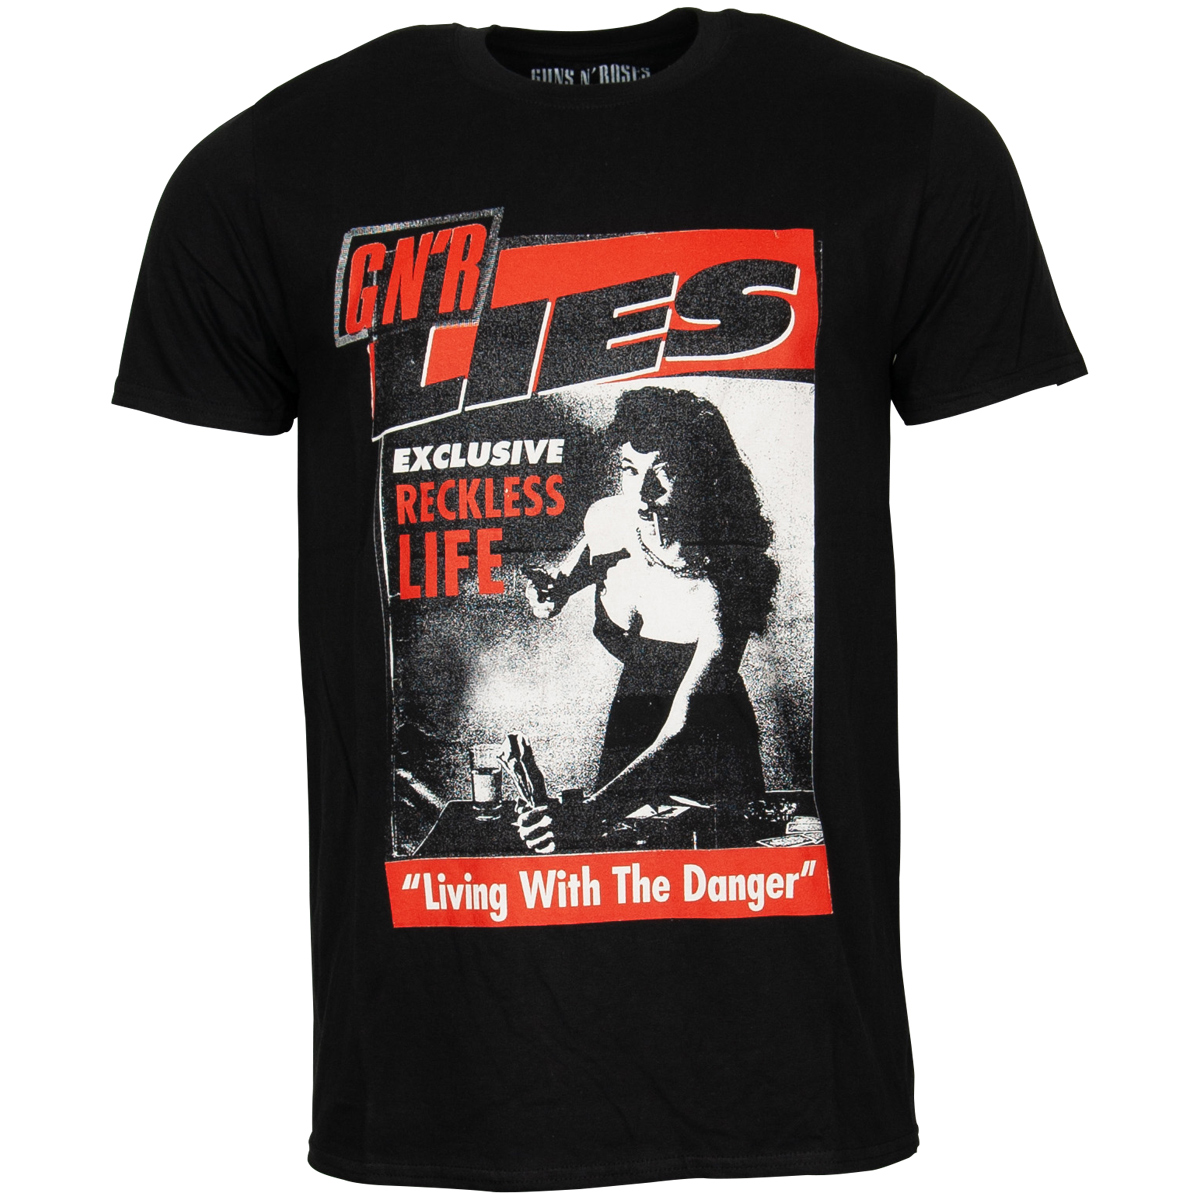 Guns N Roses - T-Shirt Reckless Life - schwarz